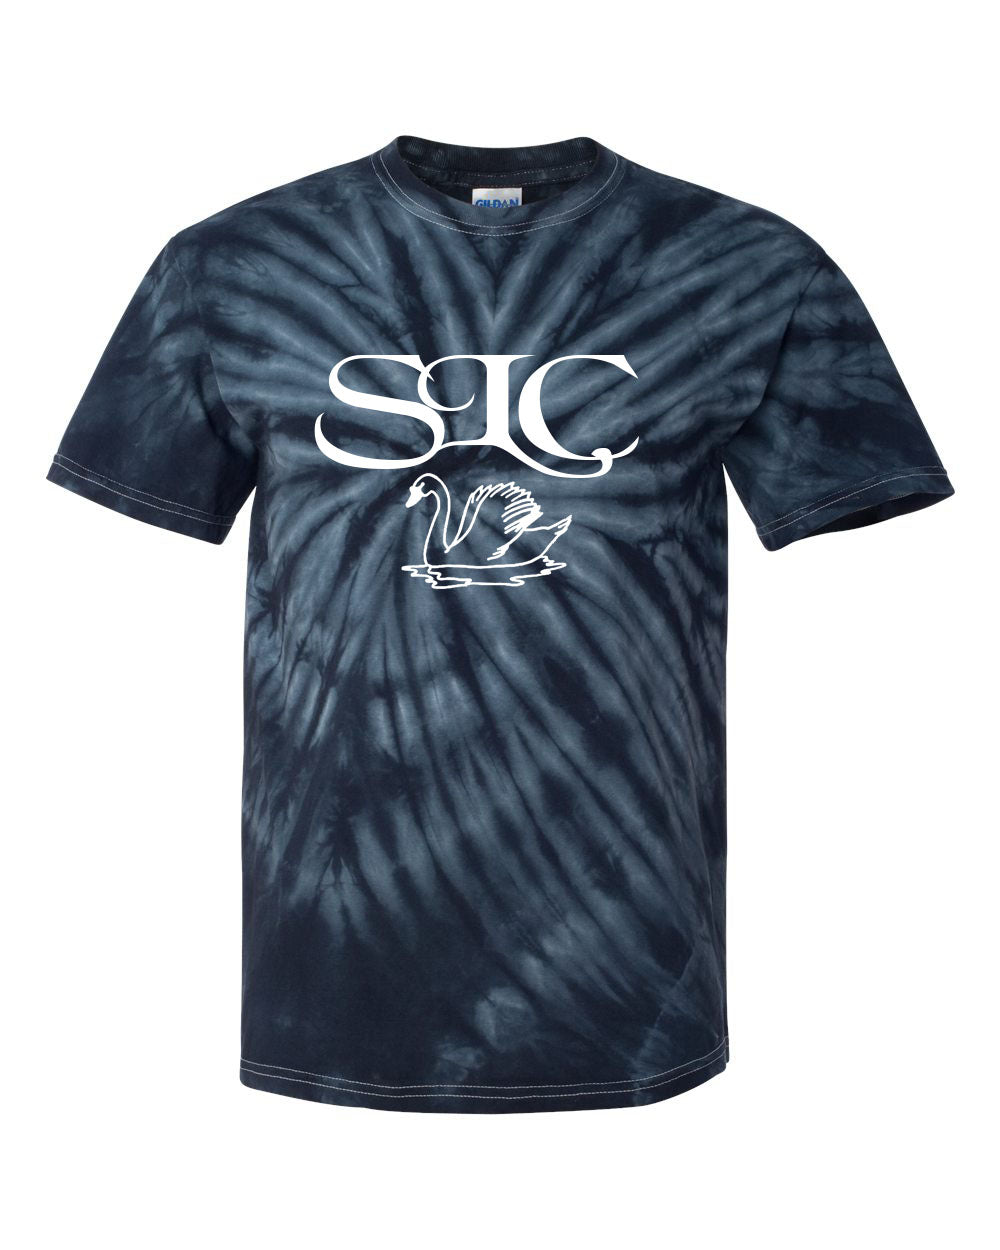 Seneca Lake Design 6 Tie Dye t-shirt